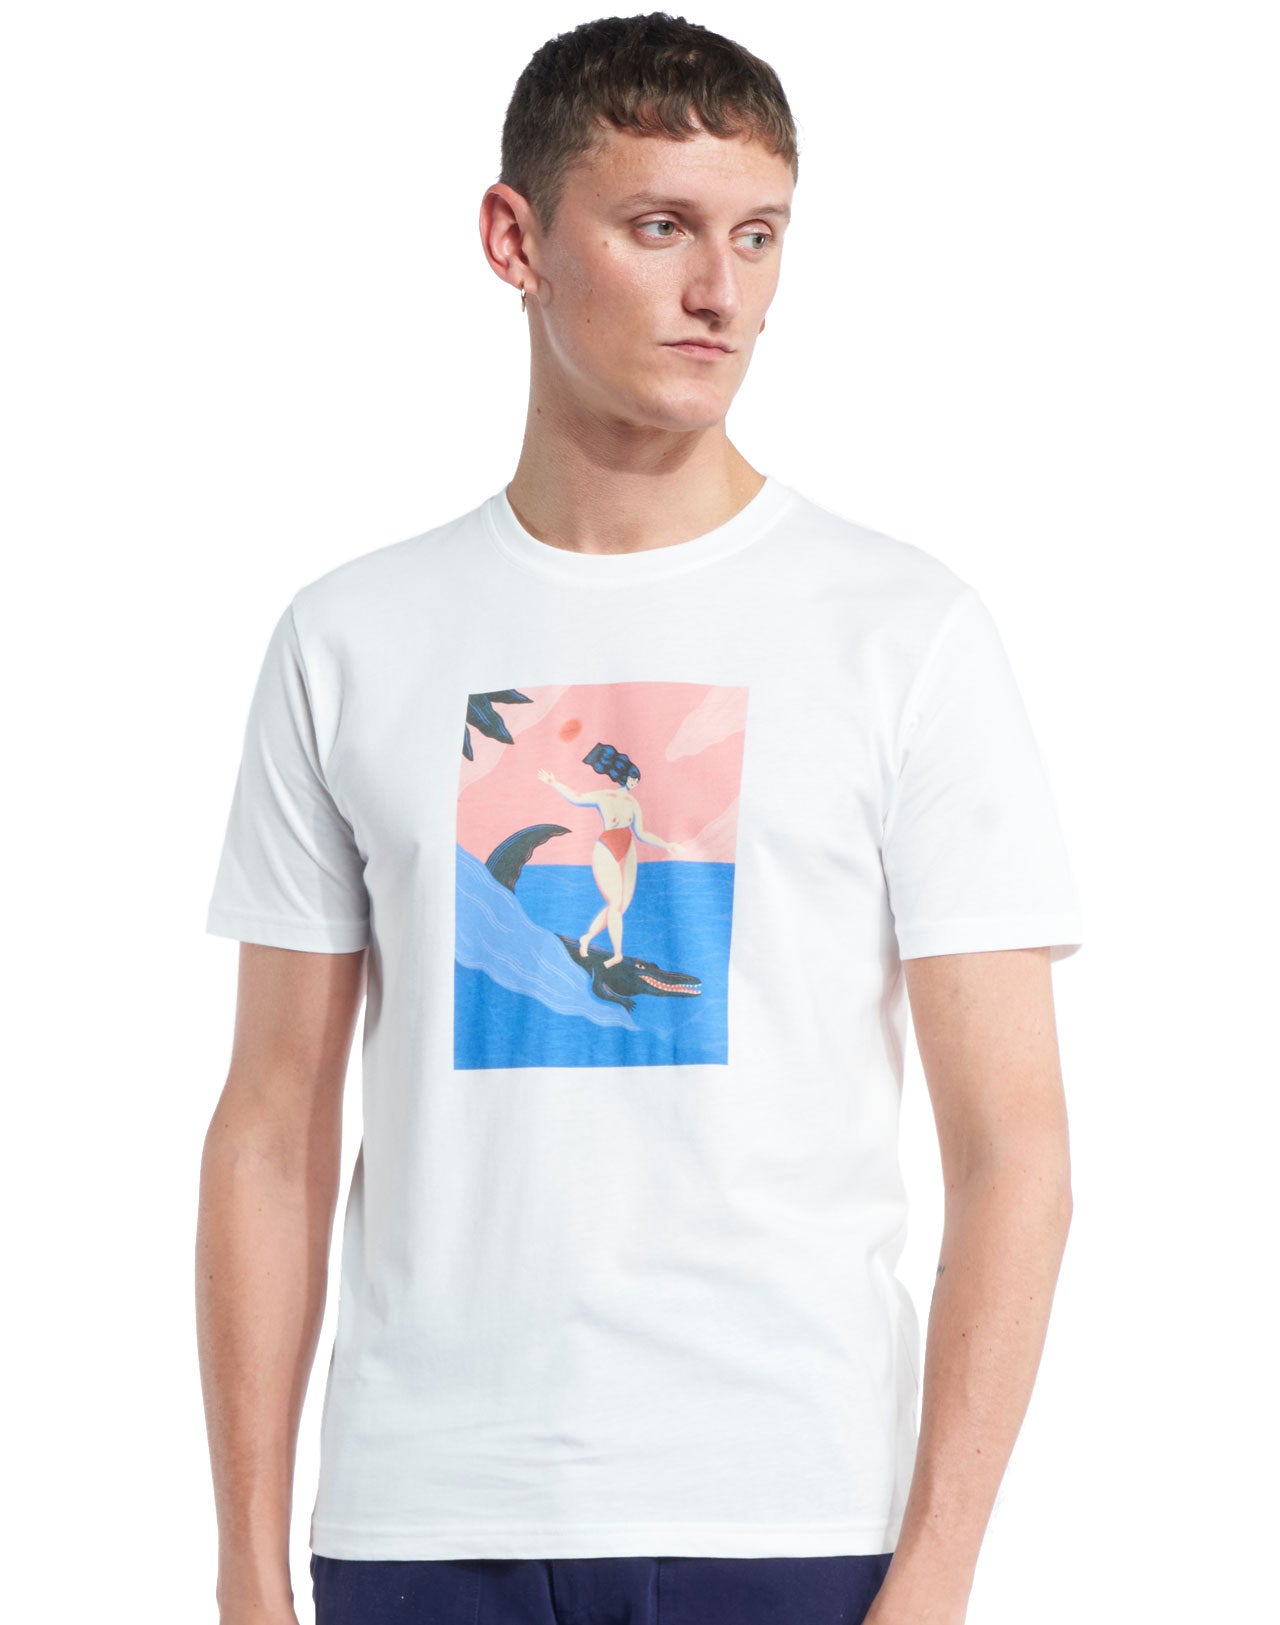 Crocosurf T-Shirt